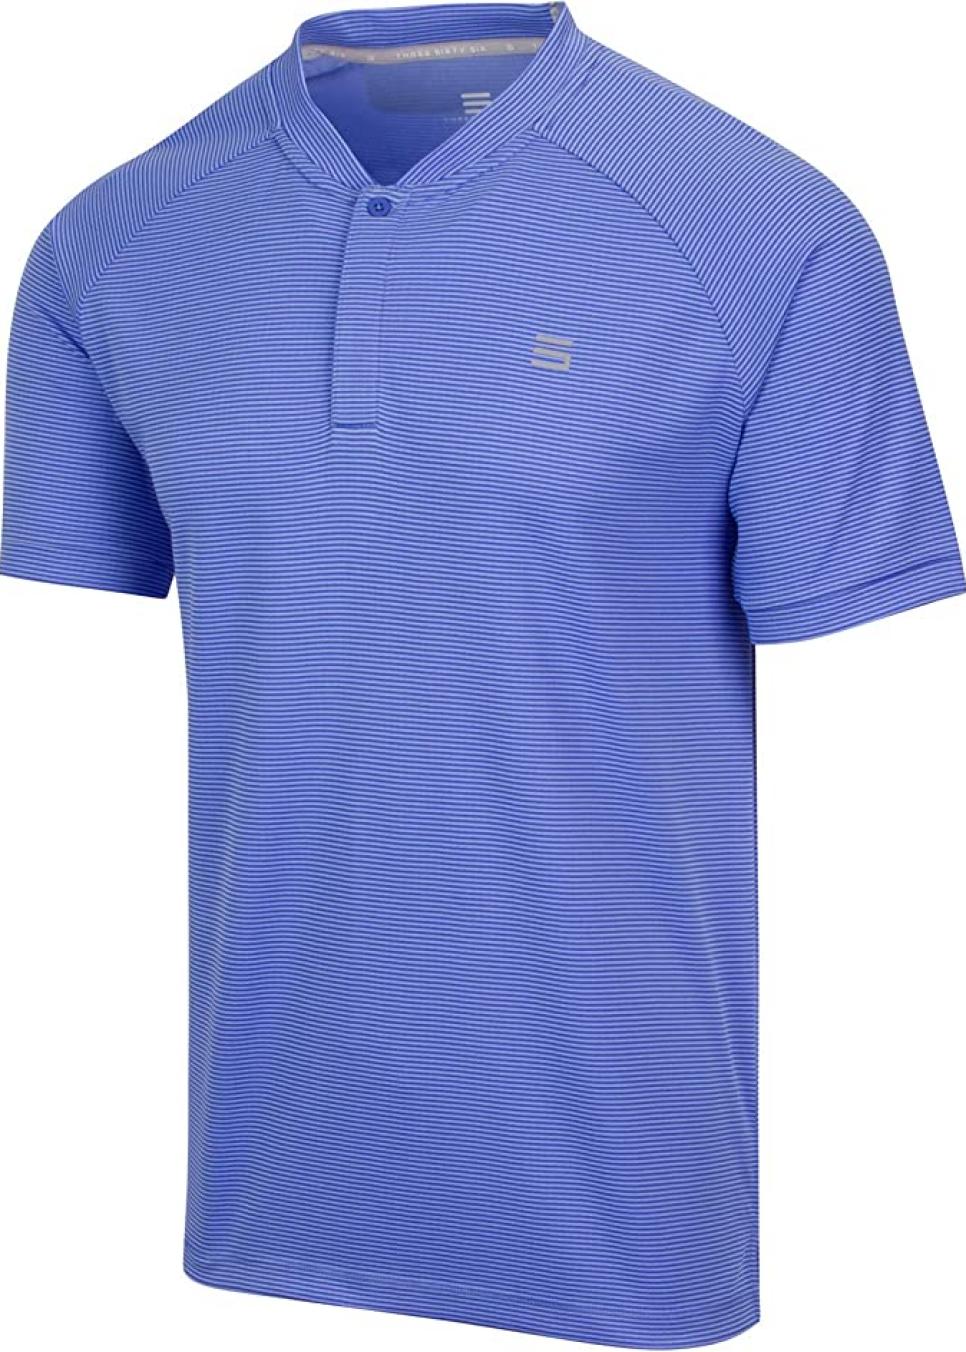 Three Sixty Six Collarless Golf Shirt